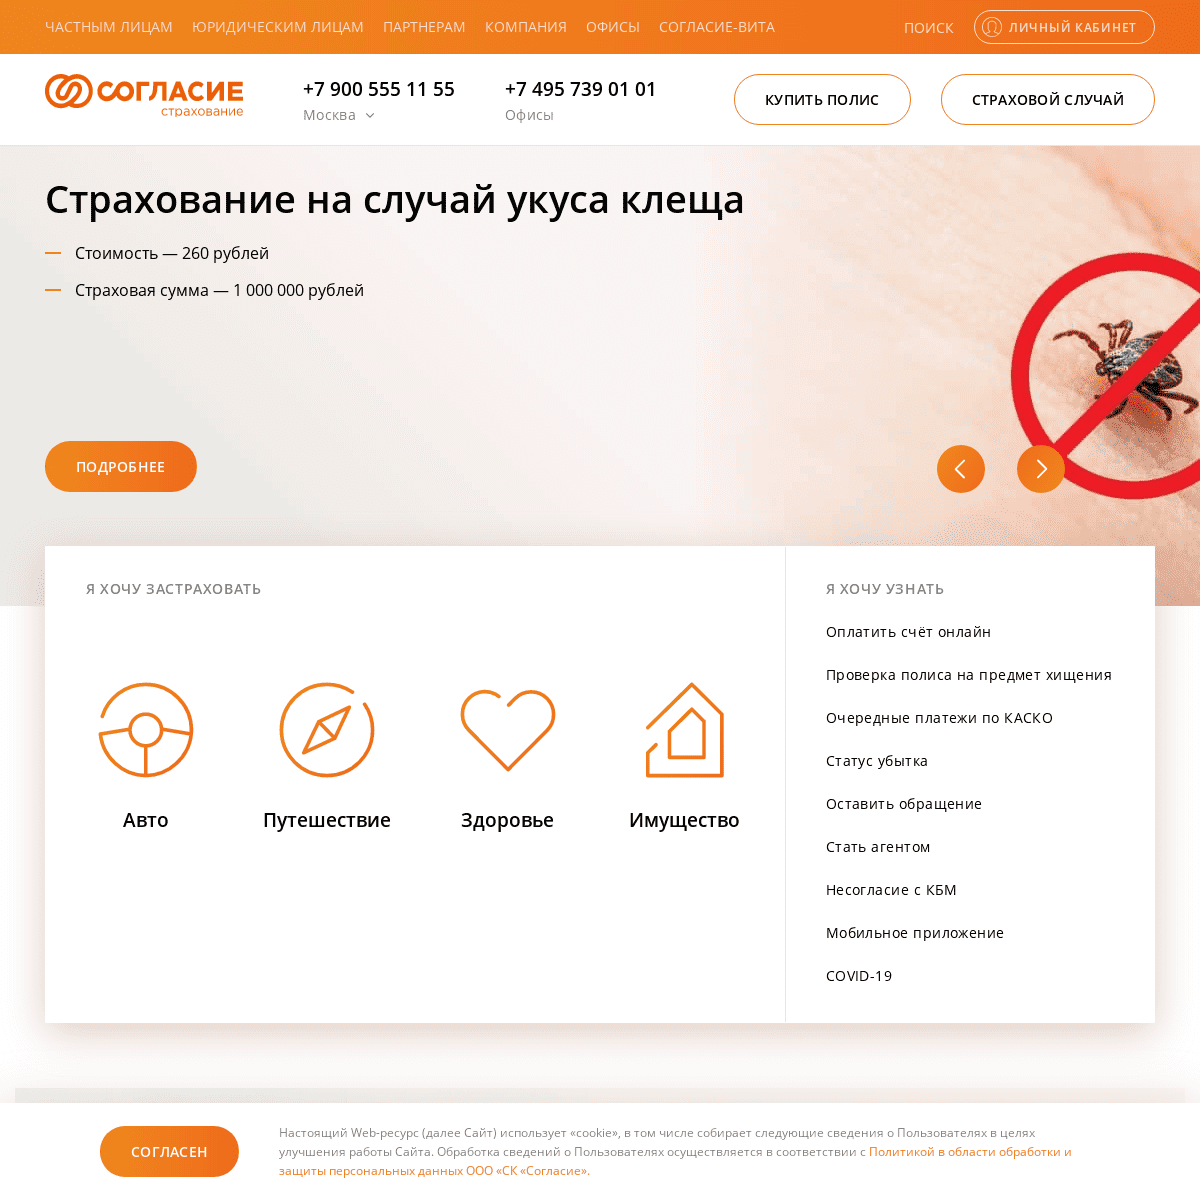 A complete backup of https://soglasie.ru